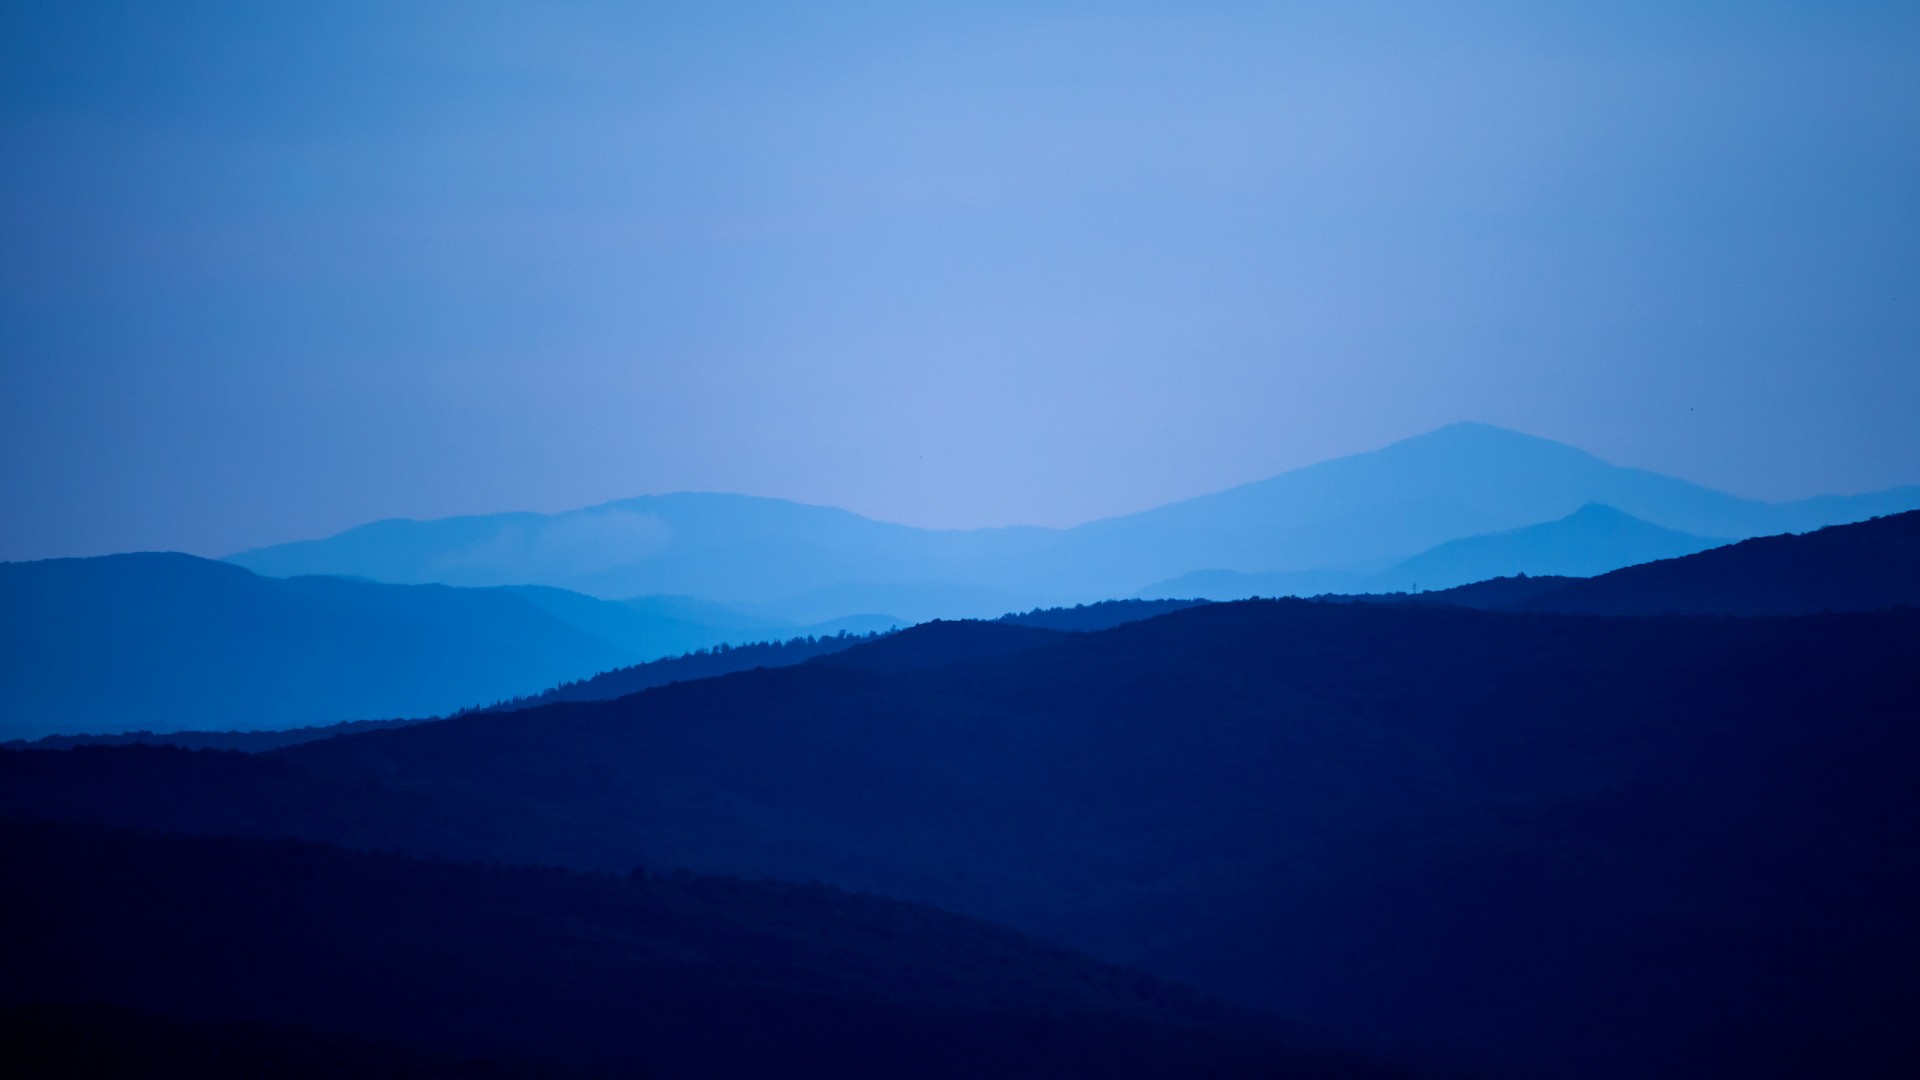 desktop wallpaper hd,sky,blue,mountainous landforms,mountain,nature